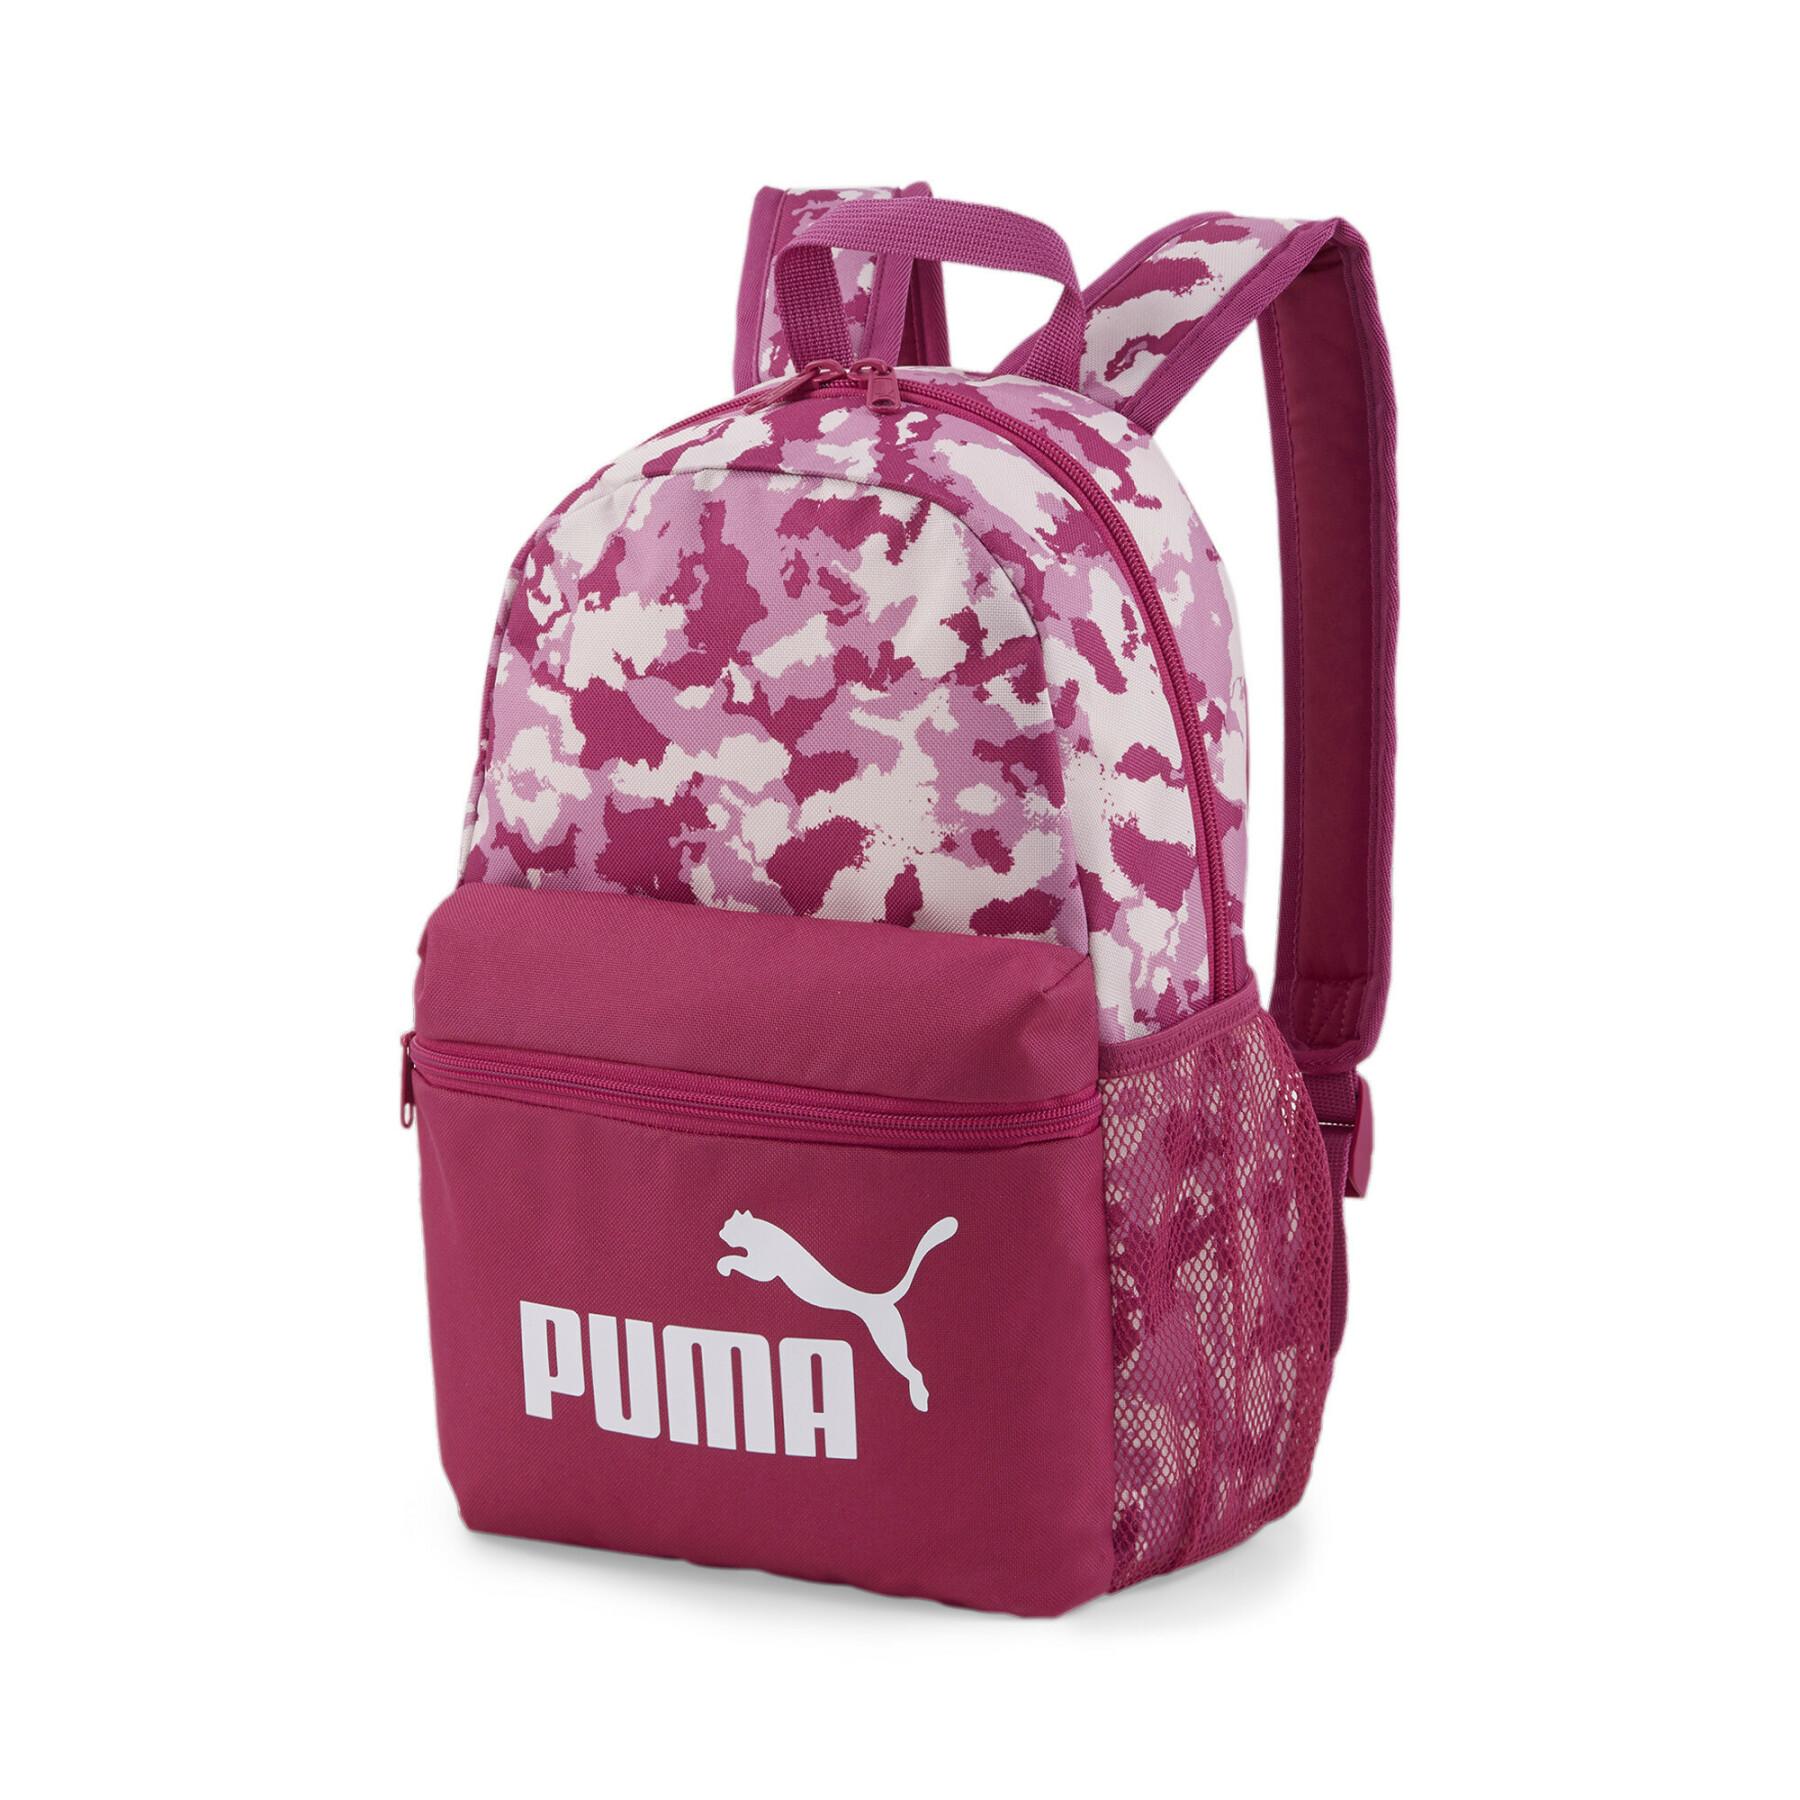 Children's backpack Puma Phase